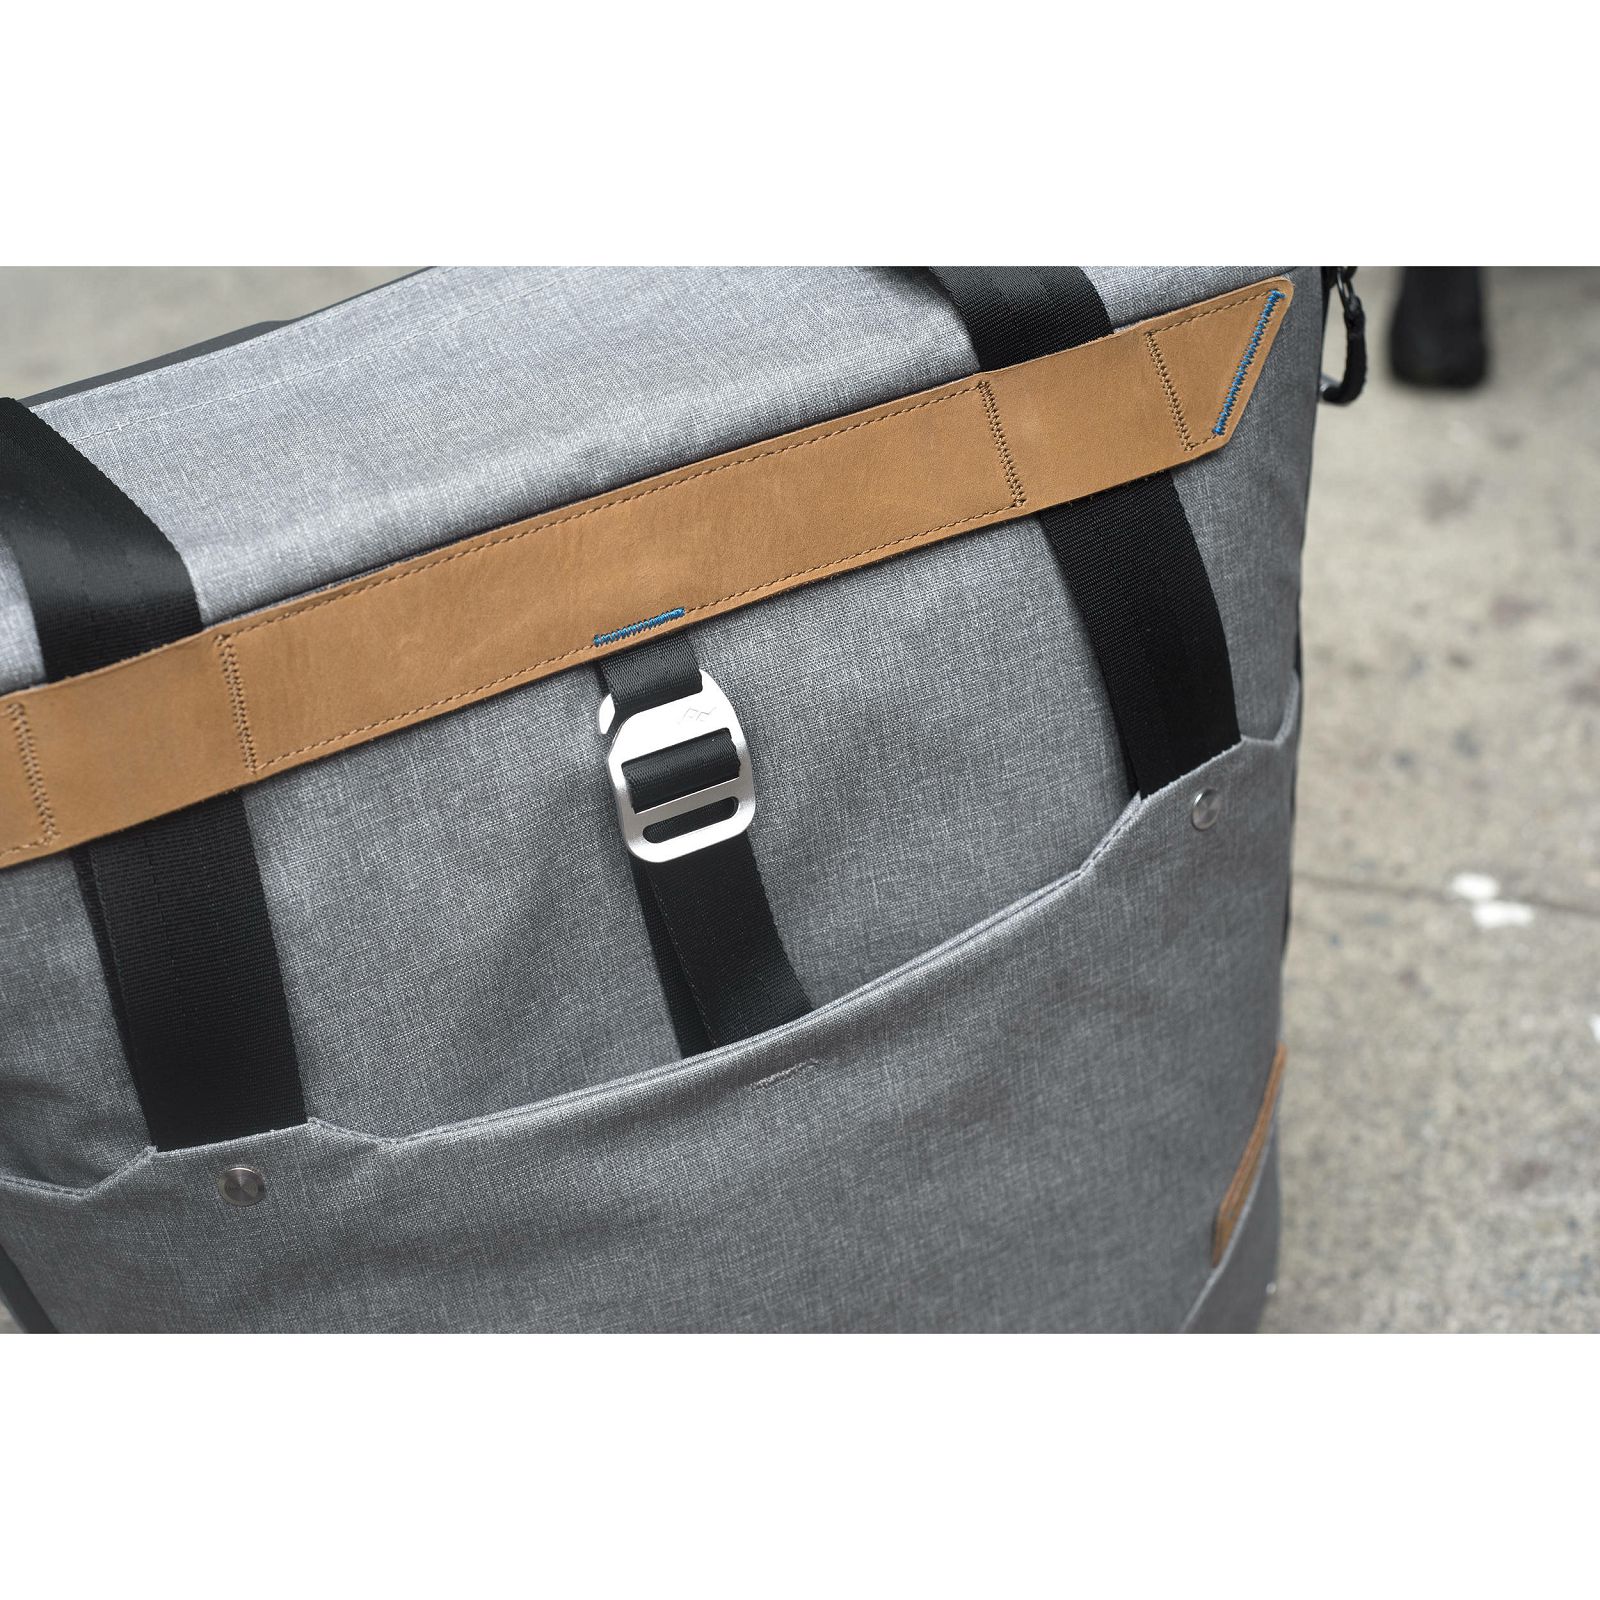 Peak Design Everyday Tote Ash Bag torba za fotoaparat i foto opremu (BT-20-AS-1)